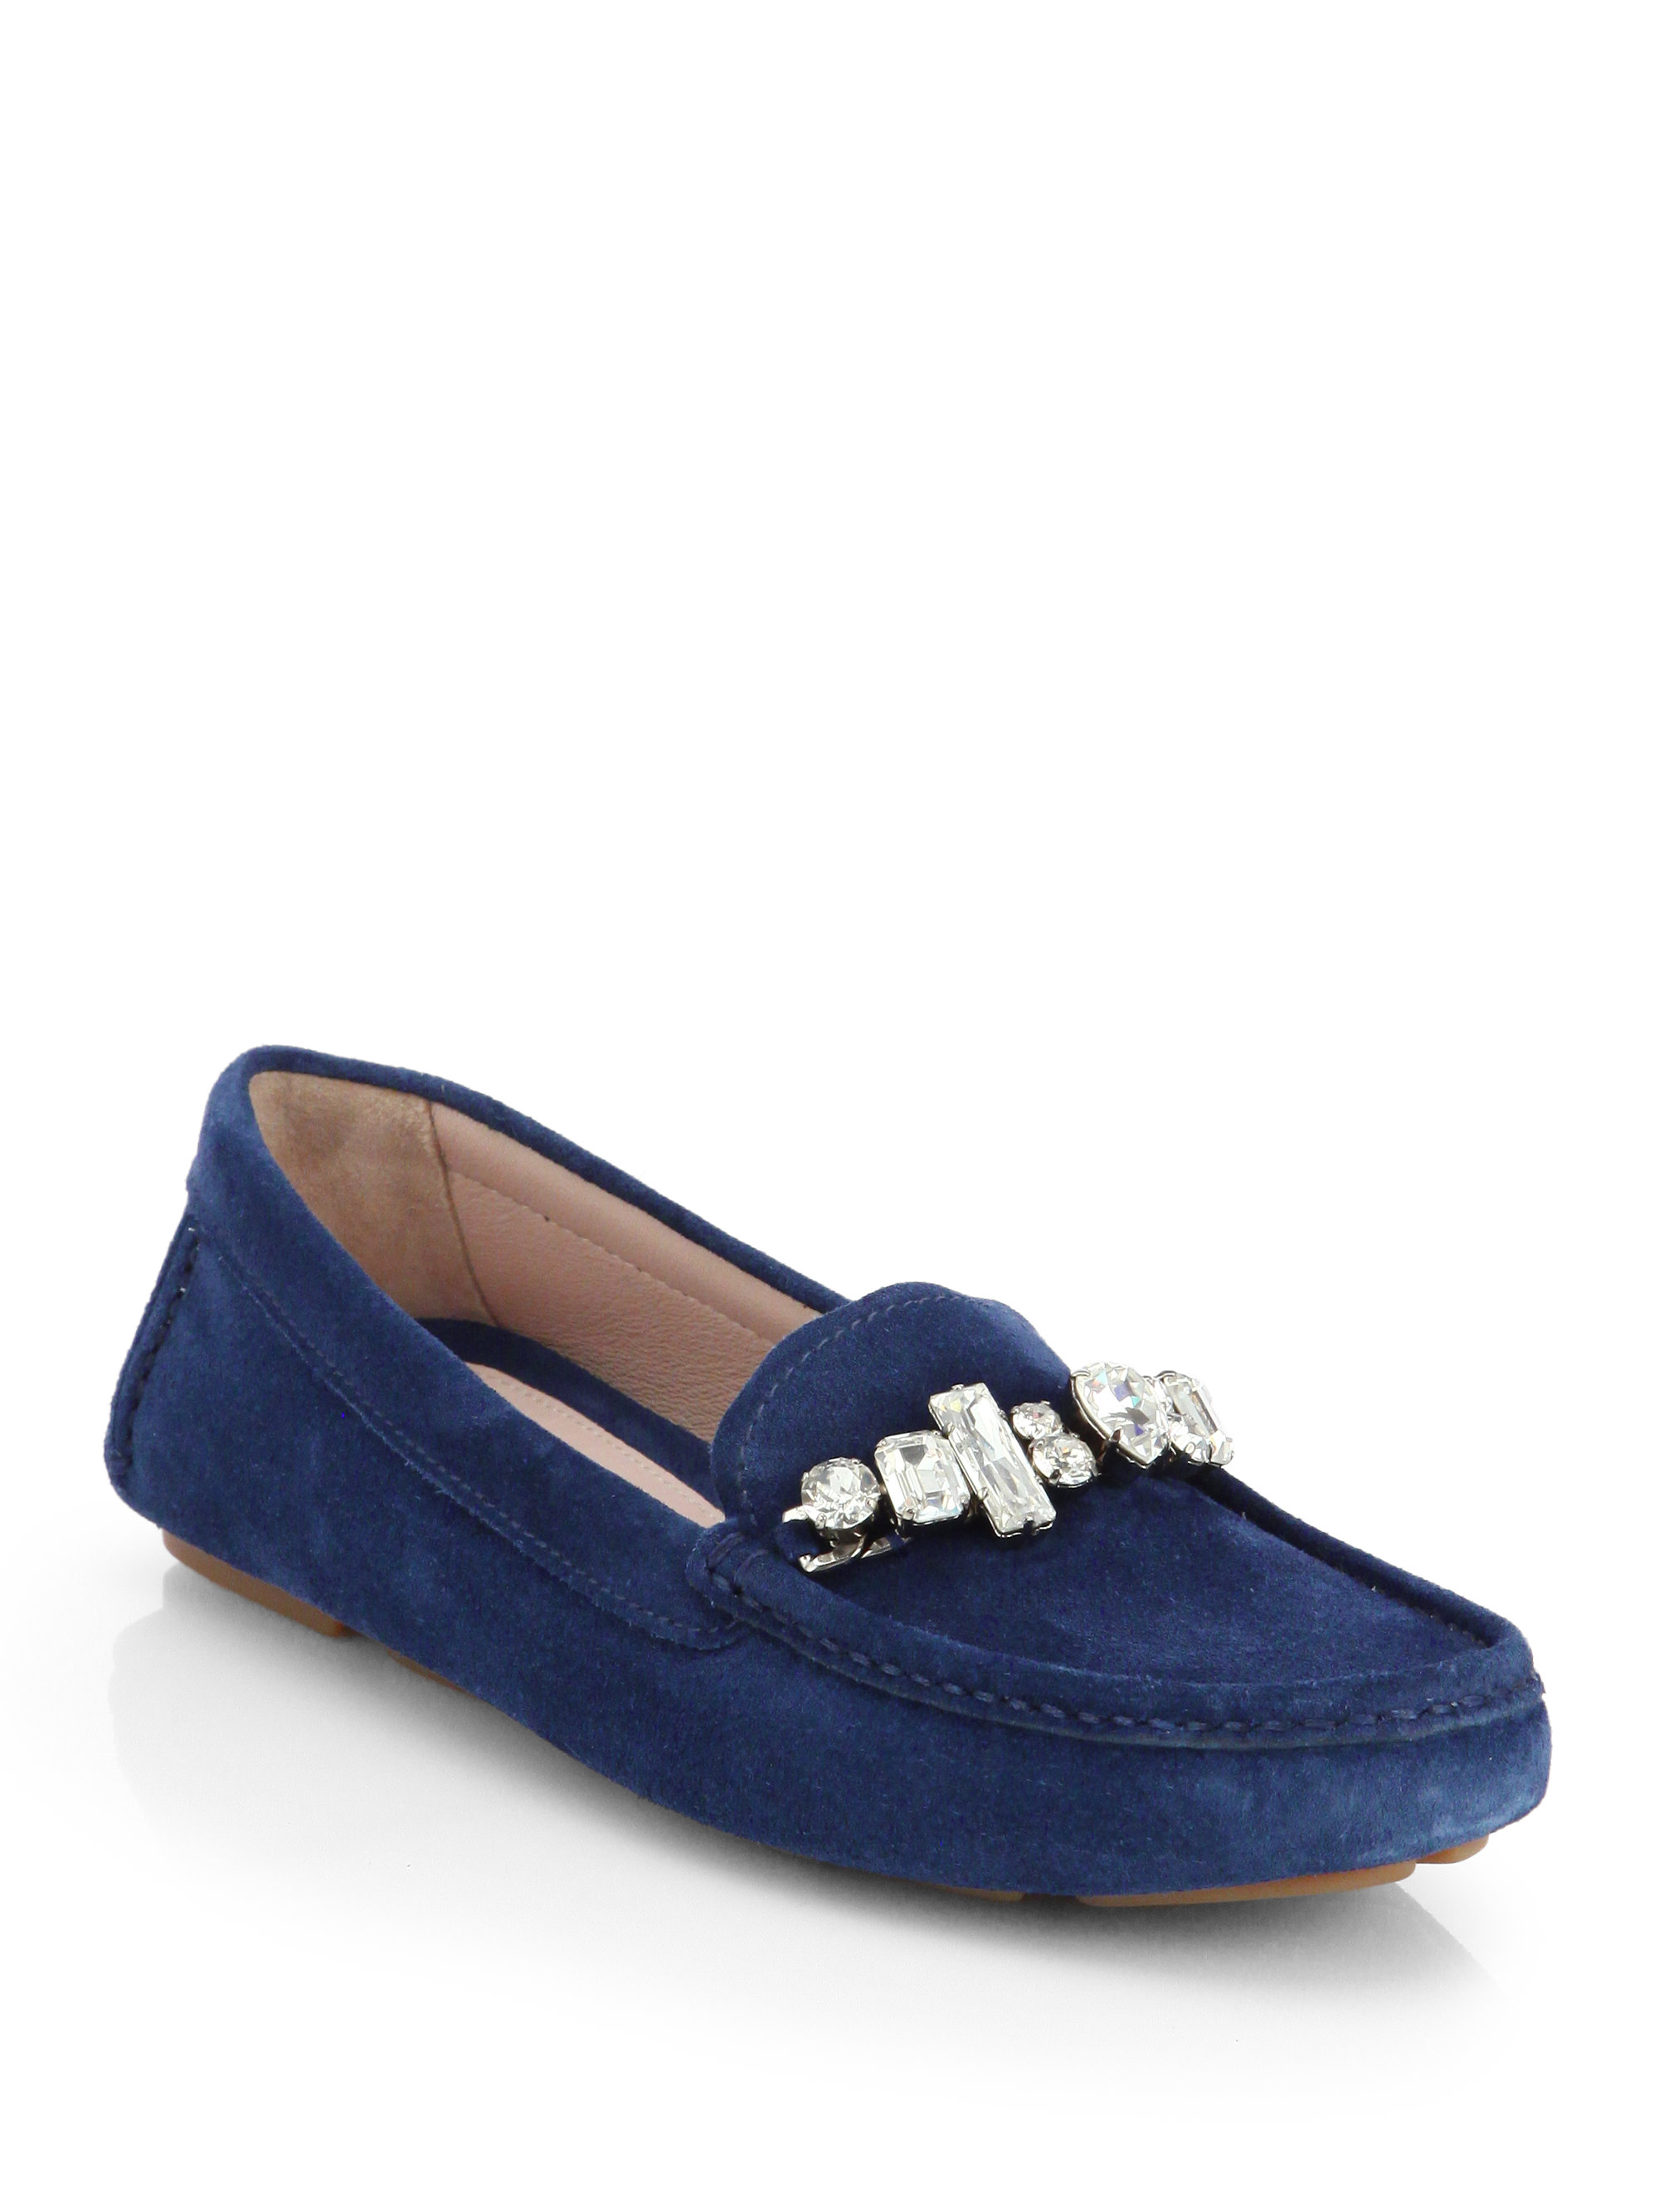 Miu Miu Donna Jeweled Suede Loafers in Blue - Lyst